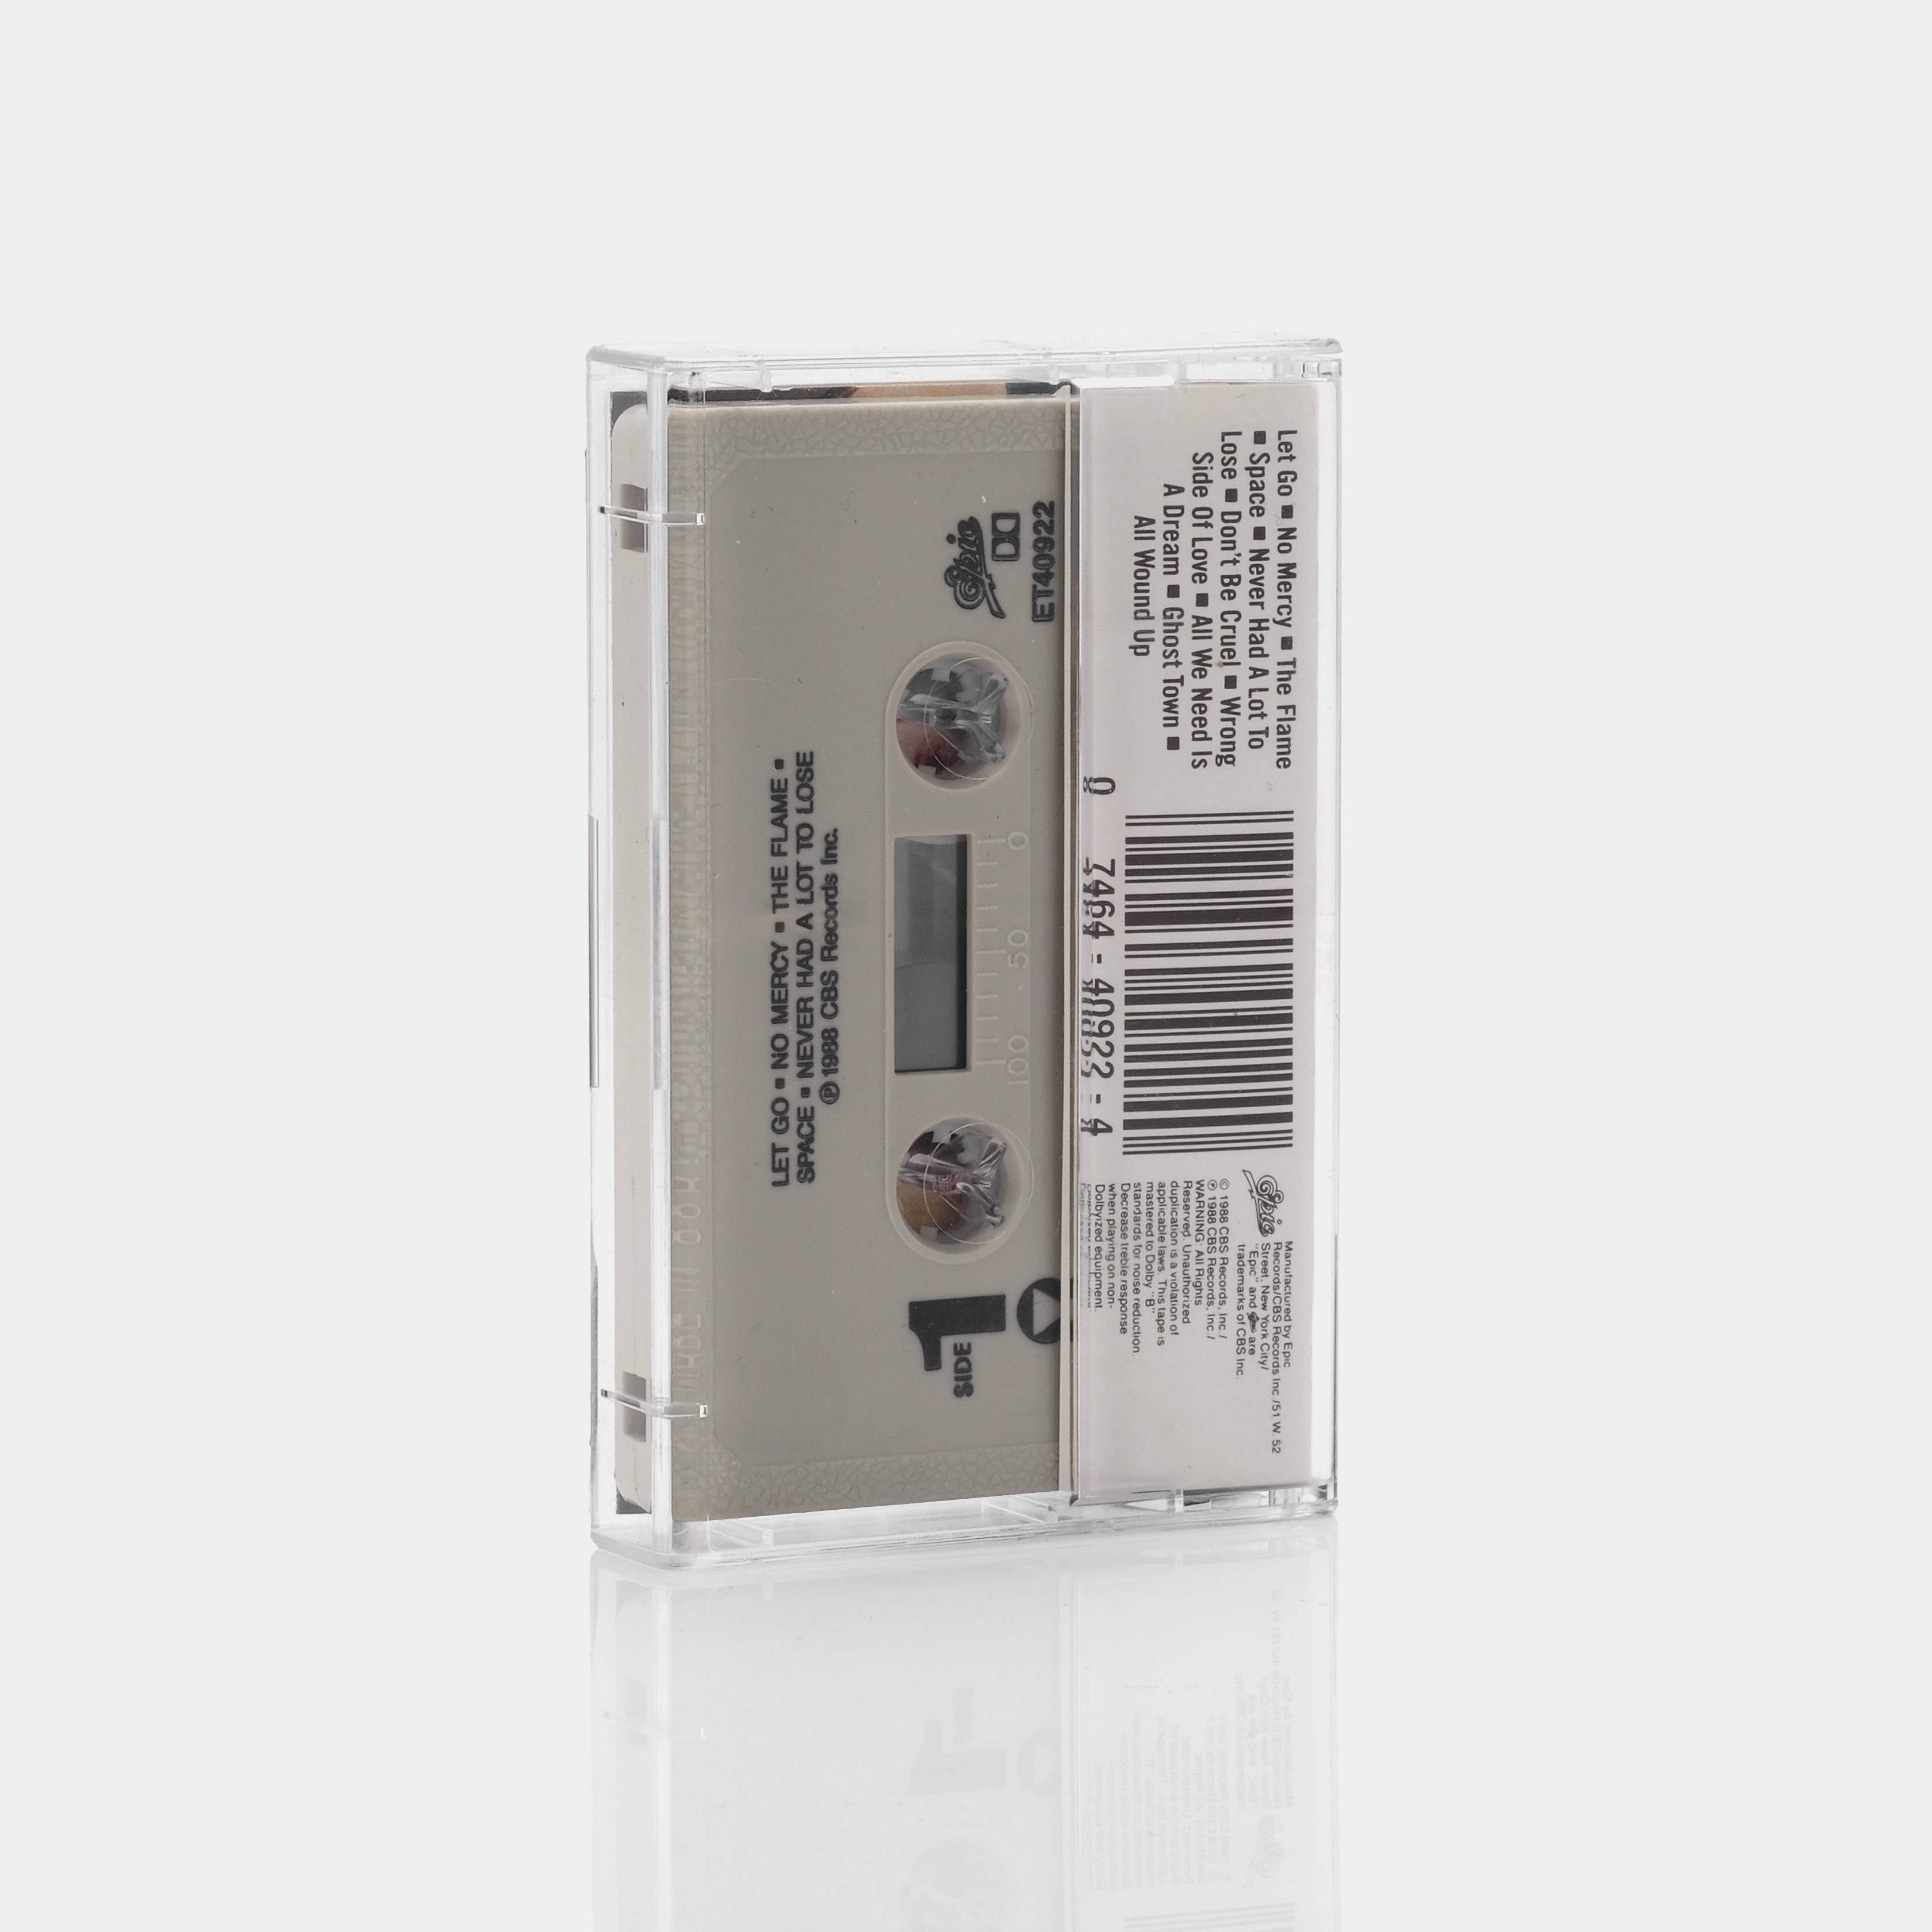 Cheap Trick - Lap Of Luxury Cassette Tape